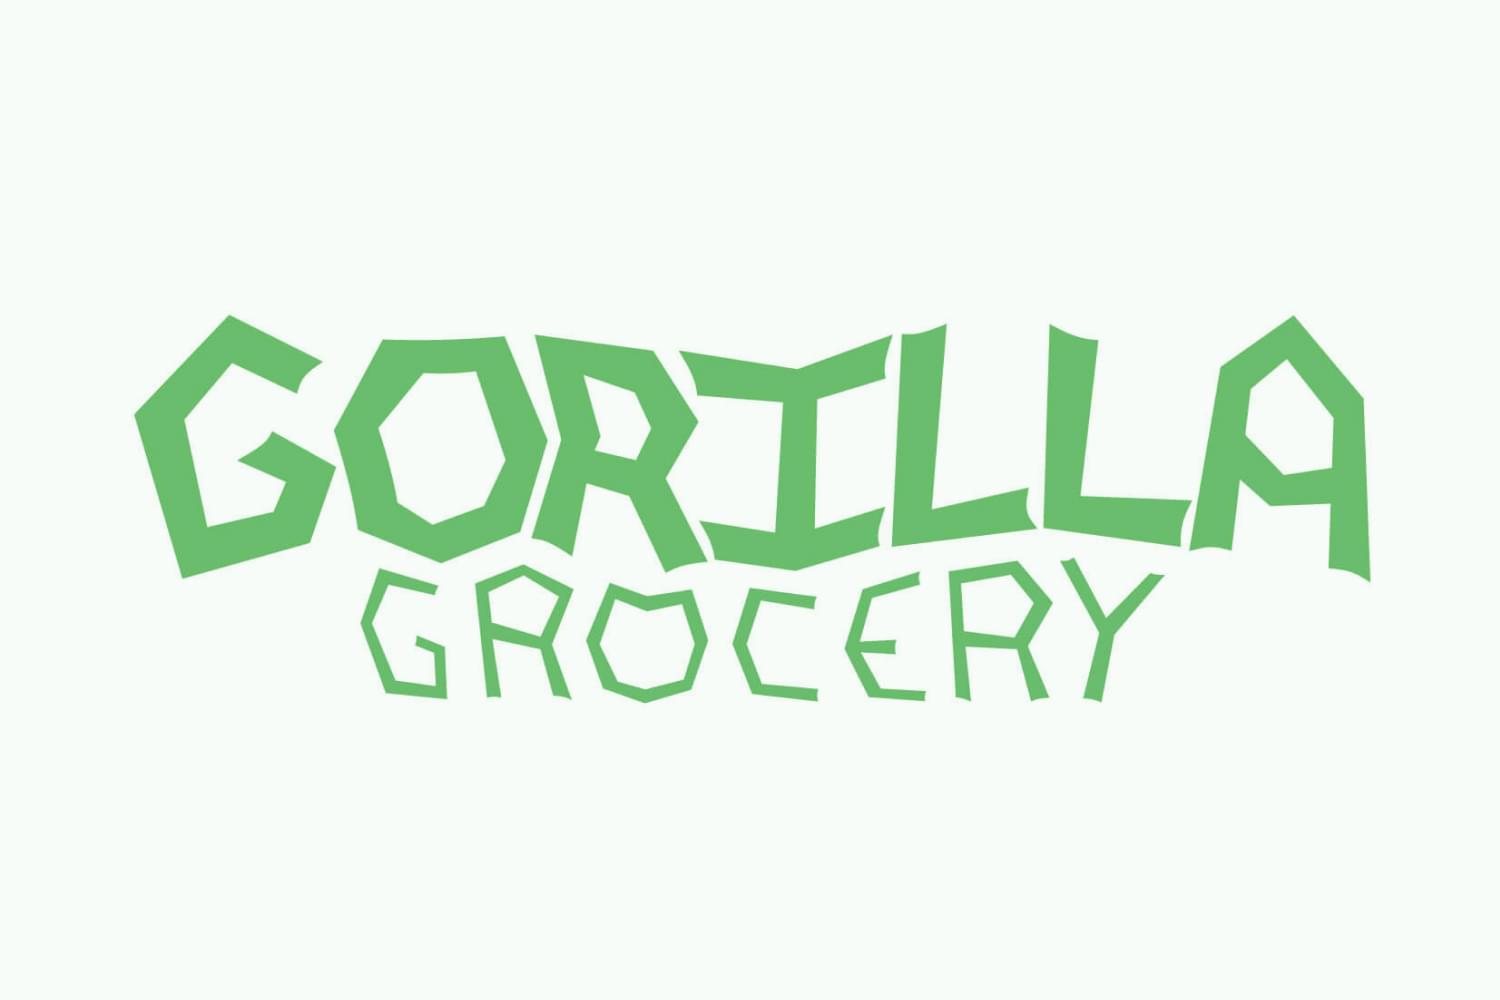 Gorilla Grocery logo